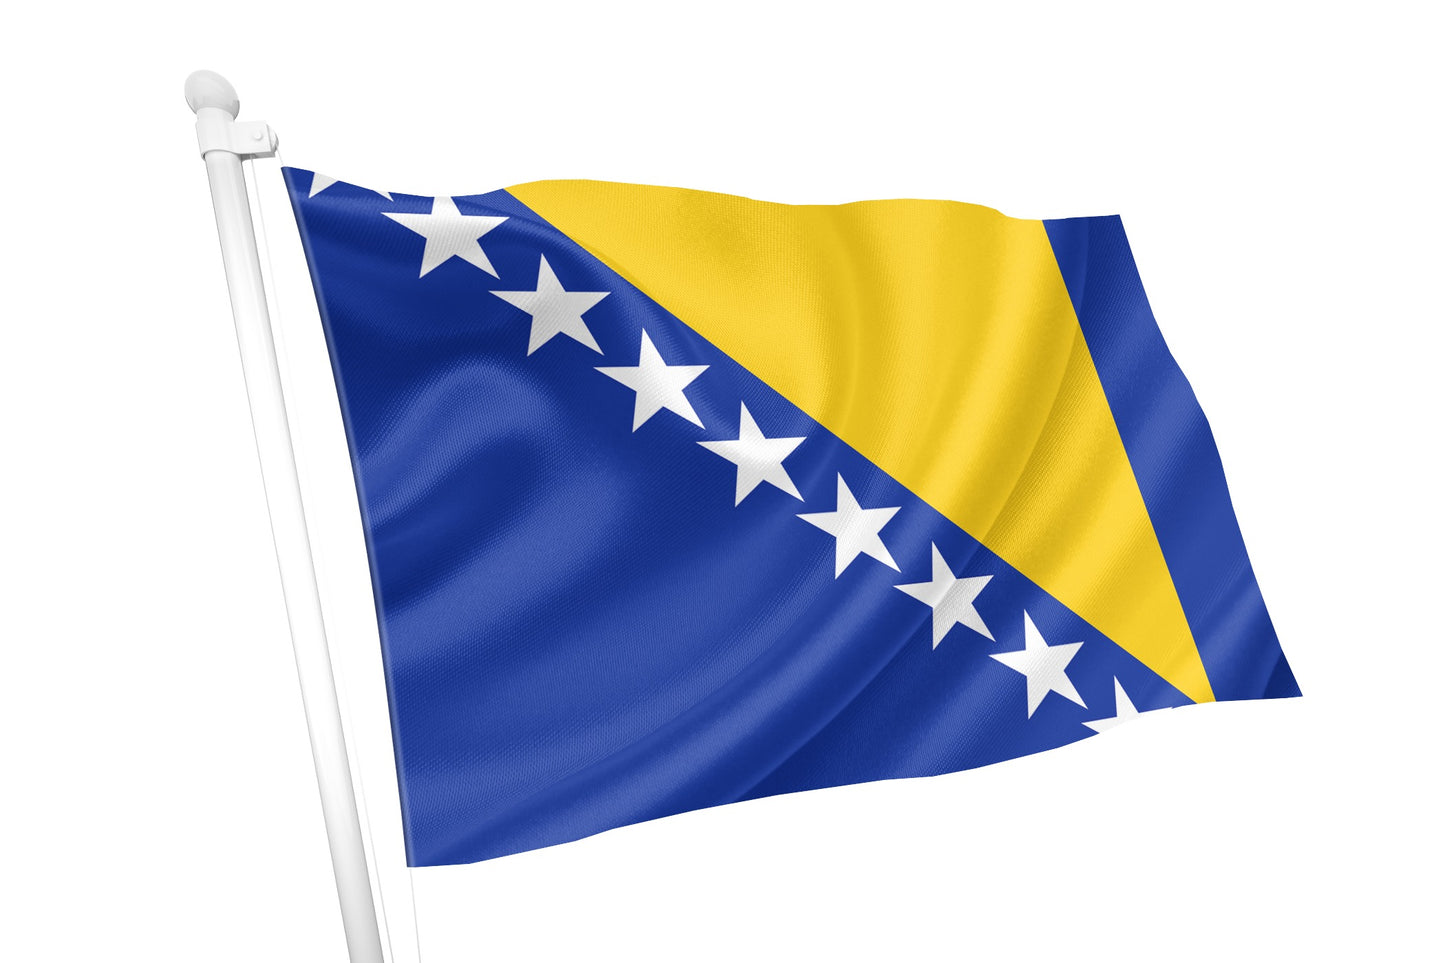 Bosnia and Herzegovina National Flag